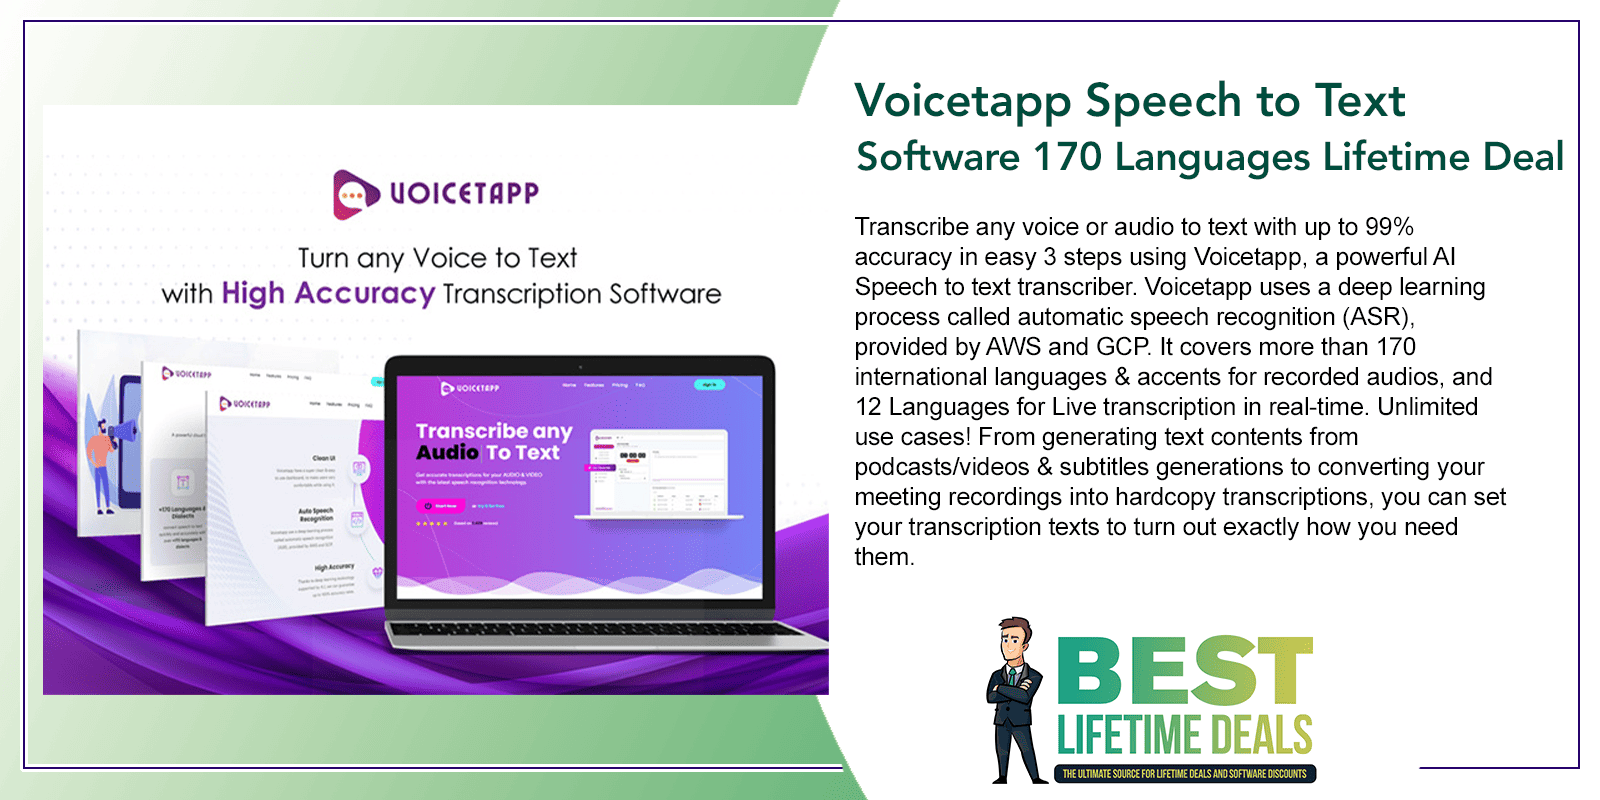 Voicetapp Speech to Text Software 170 Languages Lifetime Deal